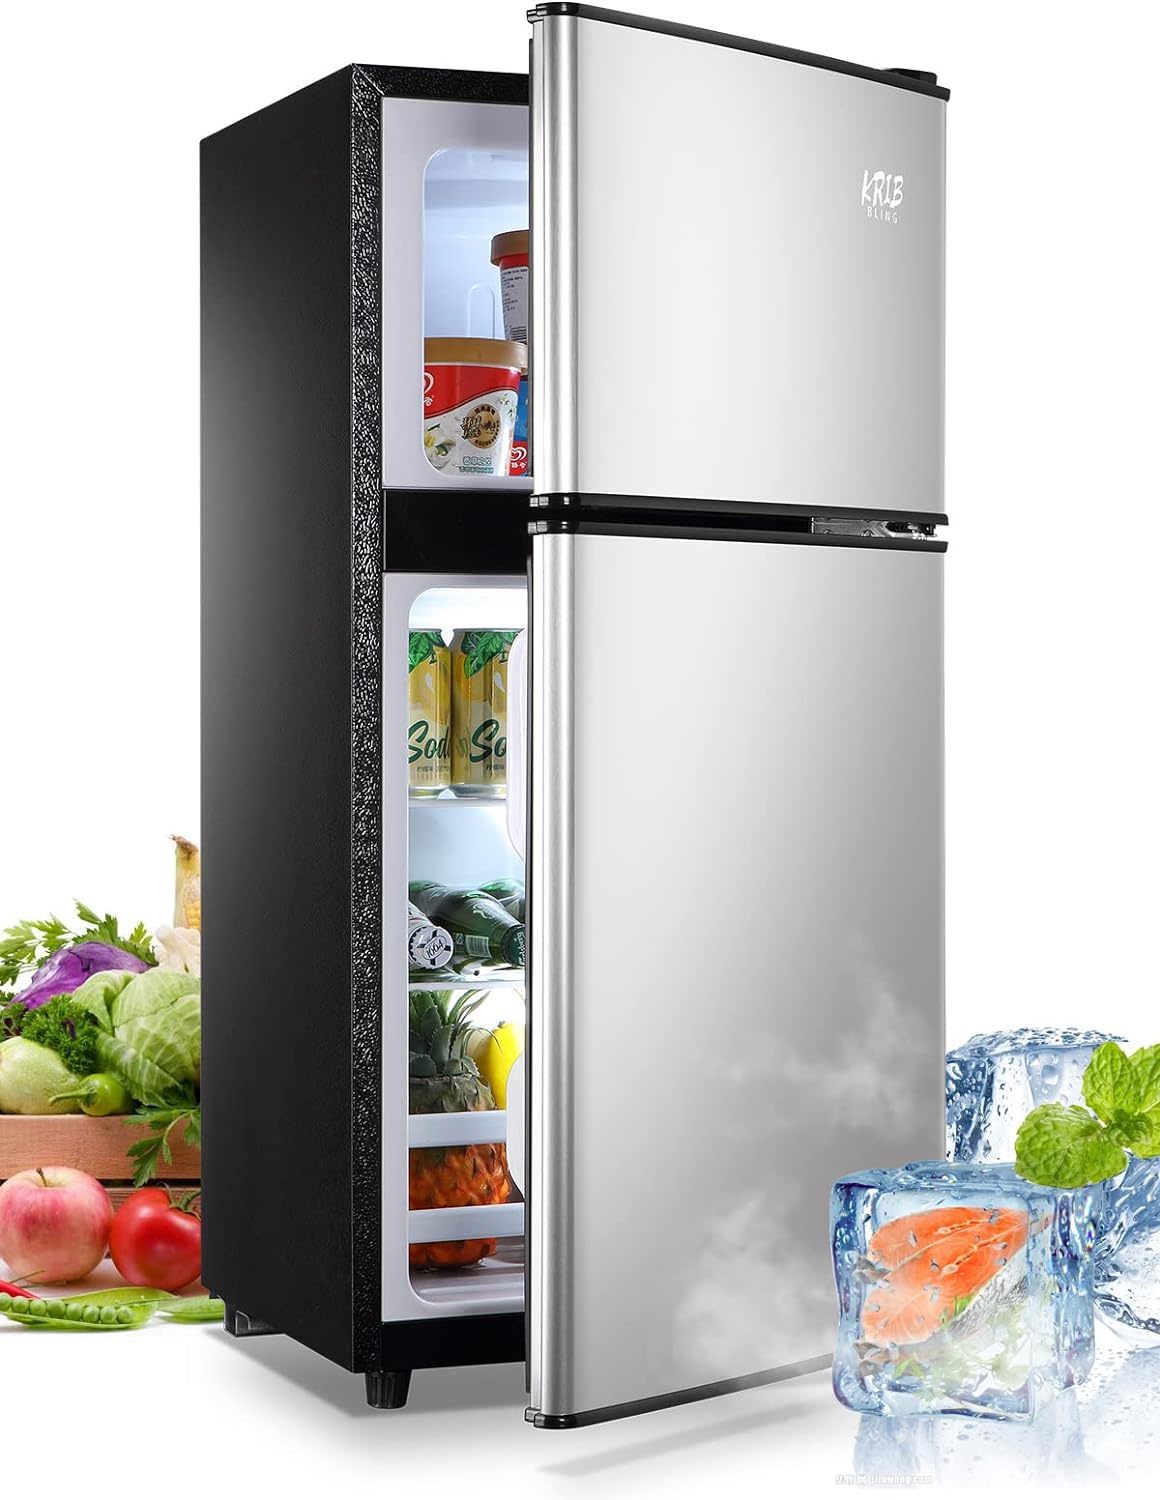 Appliances > Refrigeration